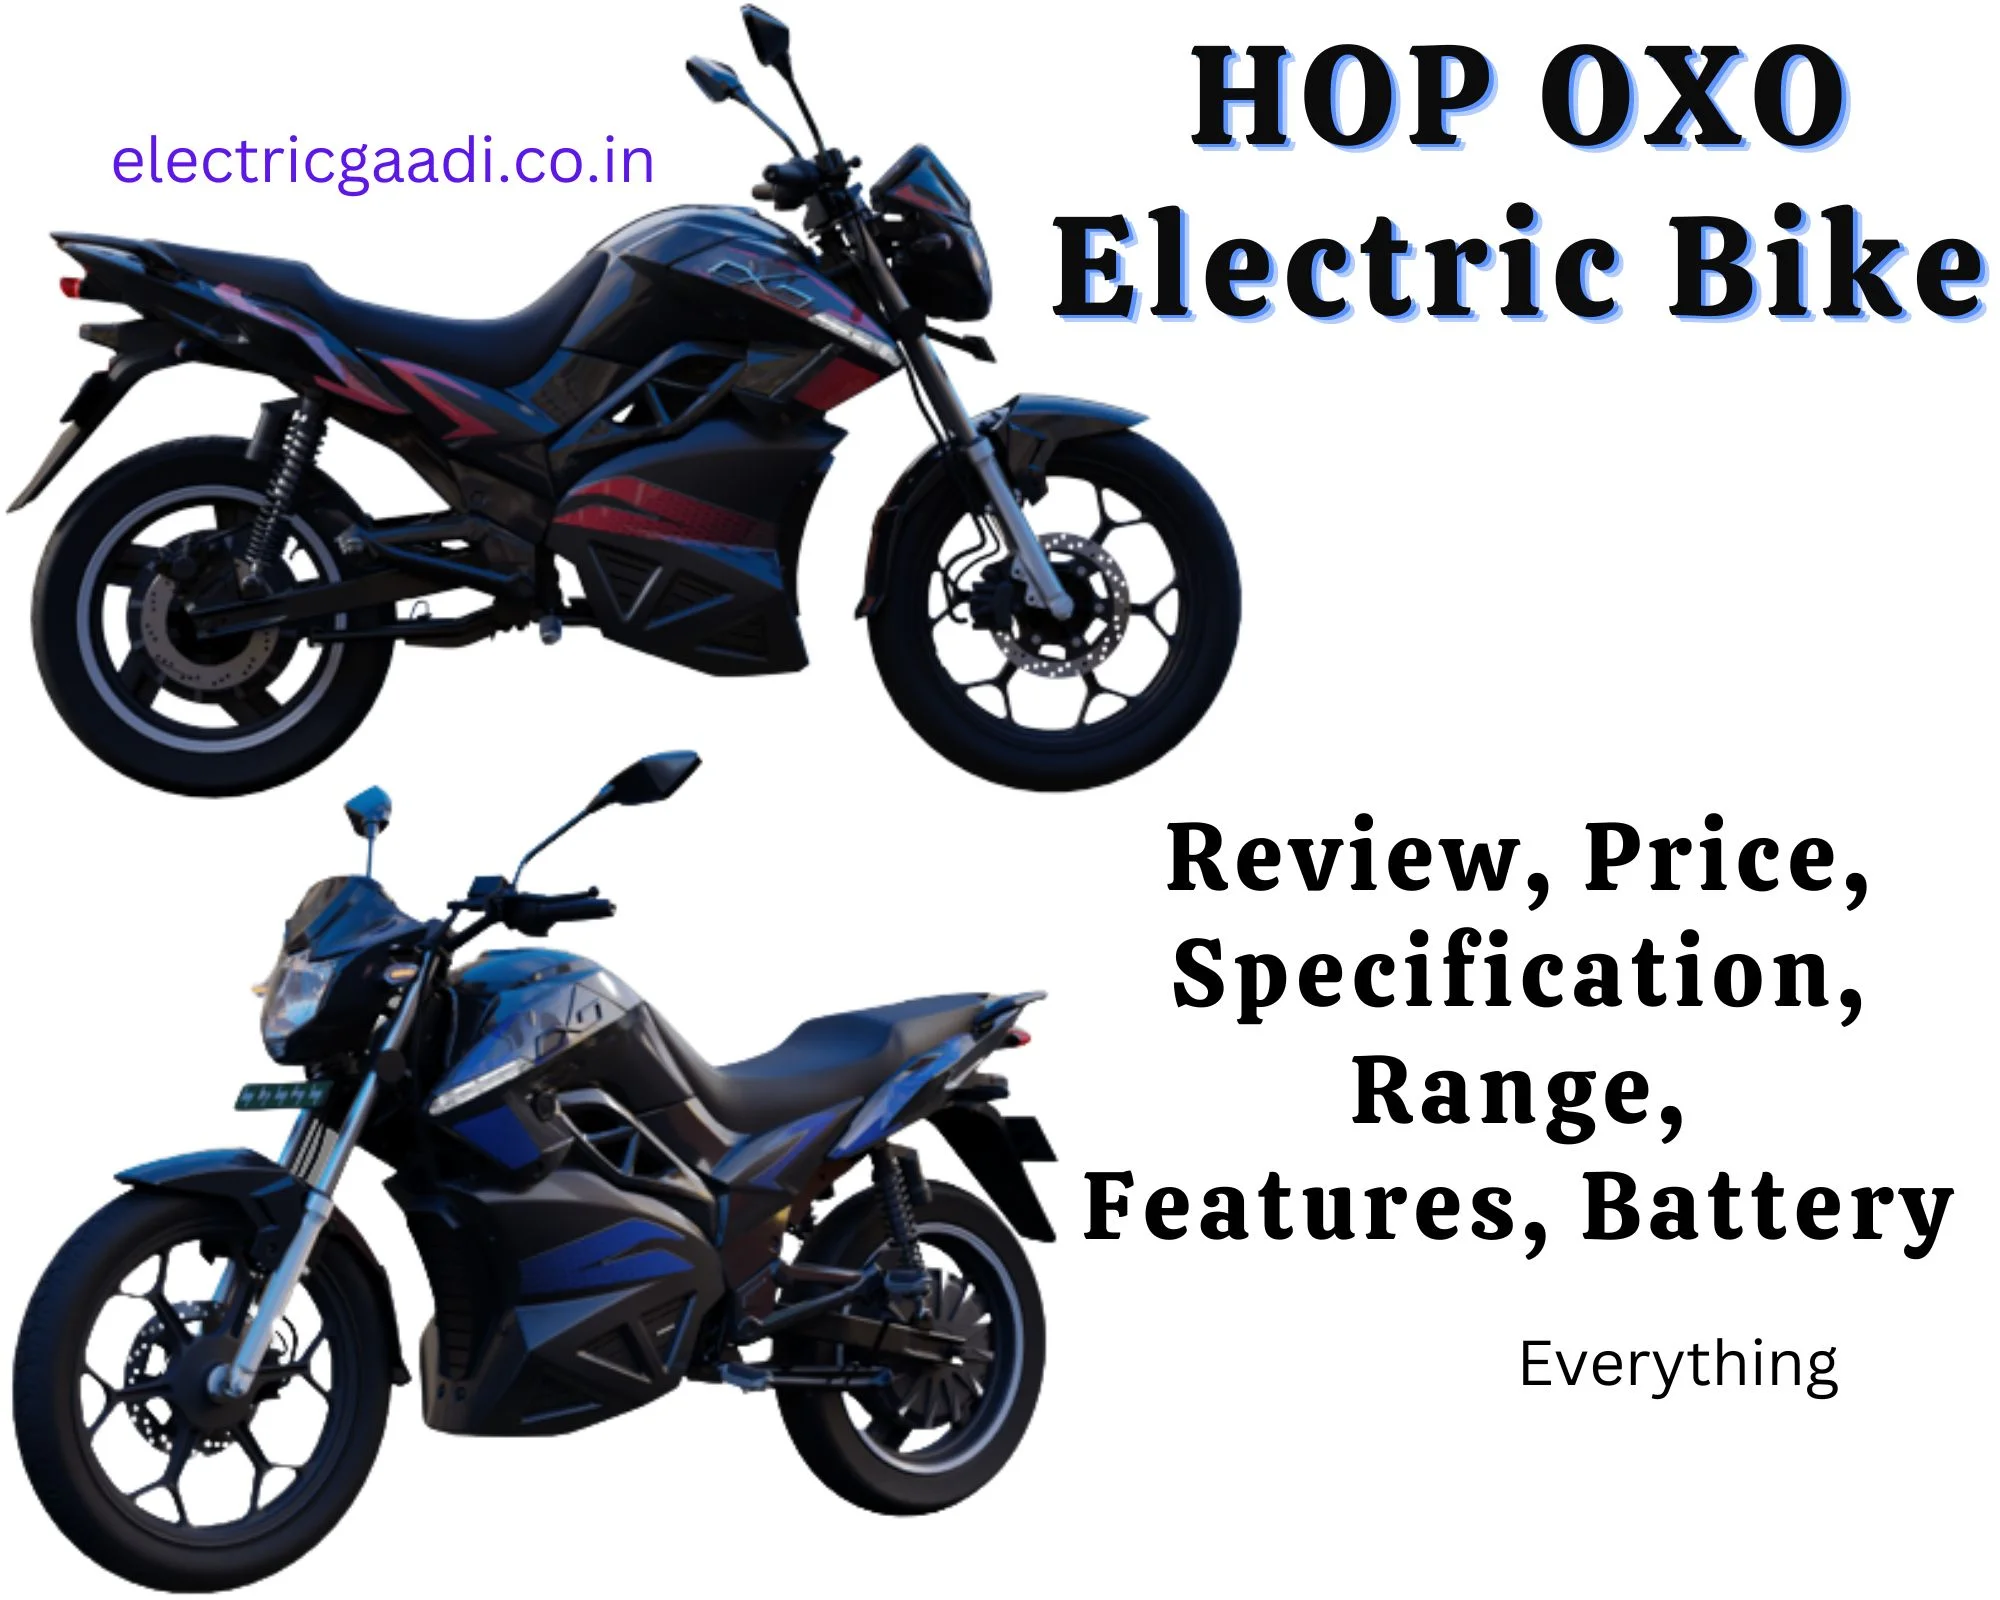 HOP OXO Electric Bike